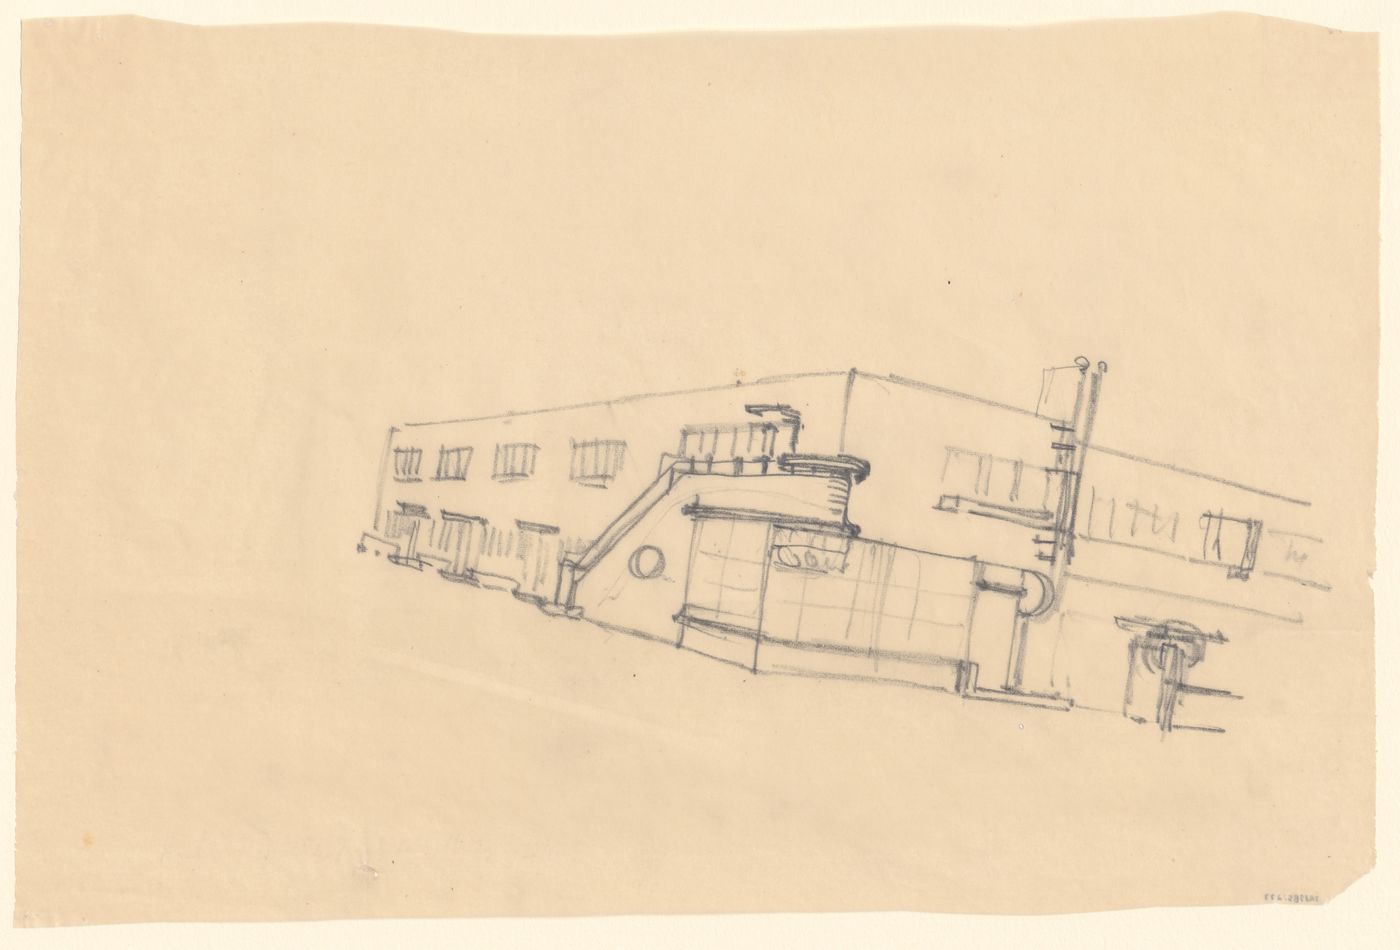 Sketch perspective for industrial row houses showing a corner shop, Hoek van Holland, Netherlands